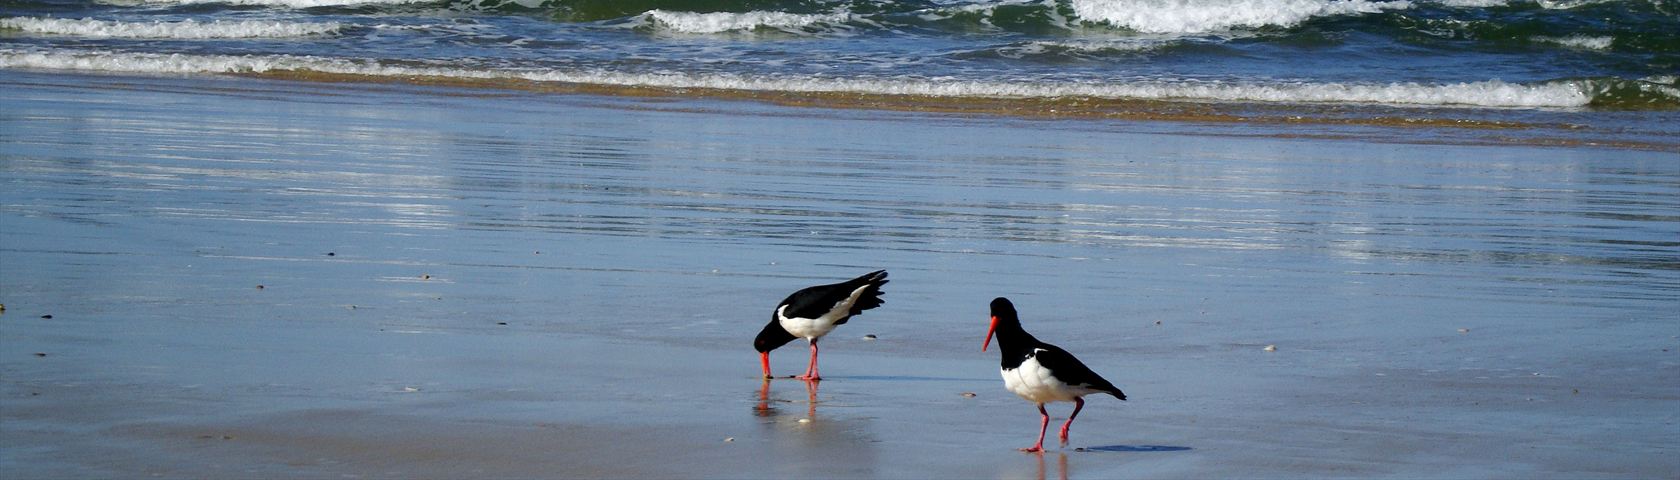 Two Birds on Beach